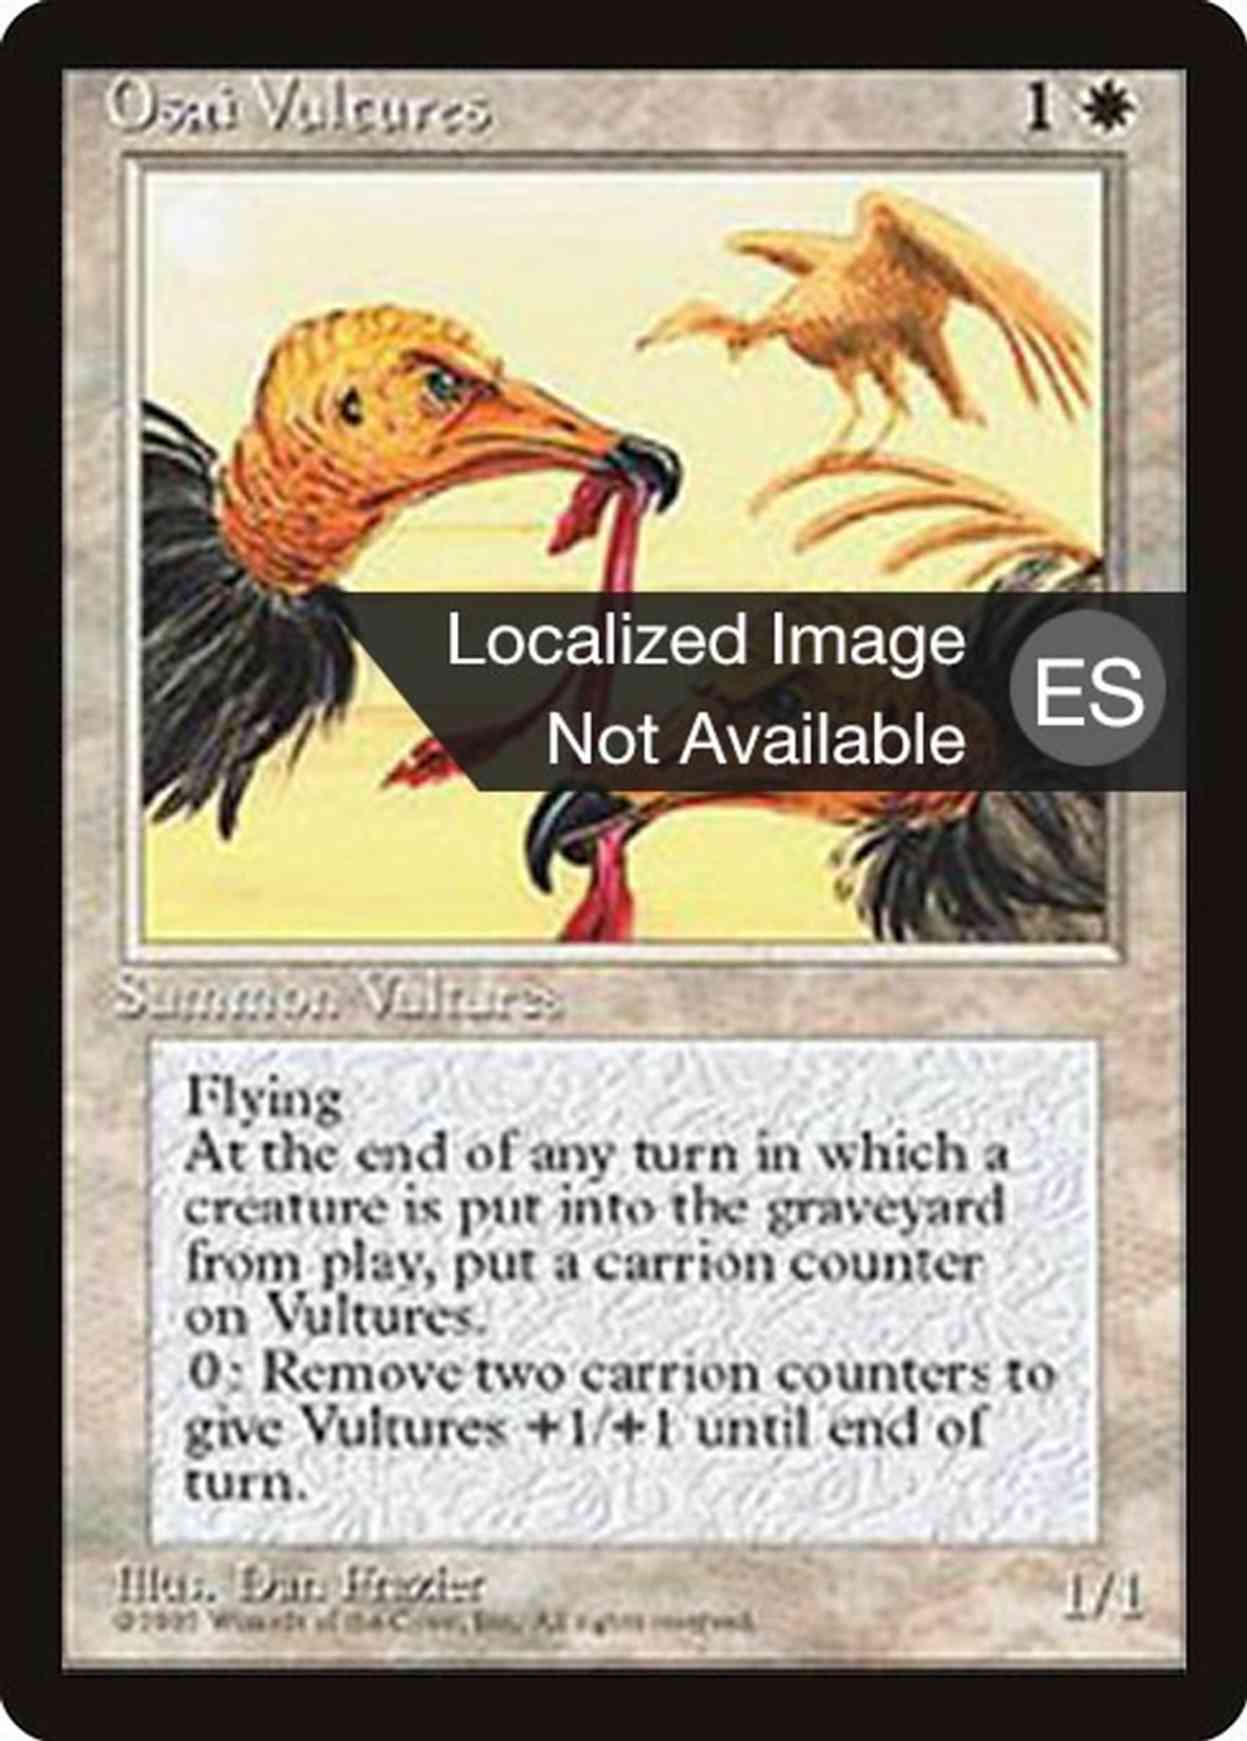 Osai Vultures magic card front